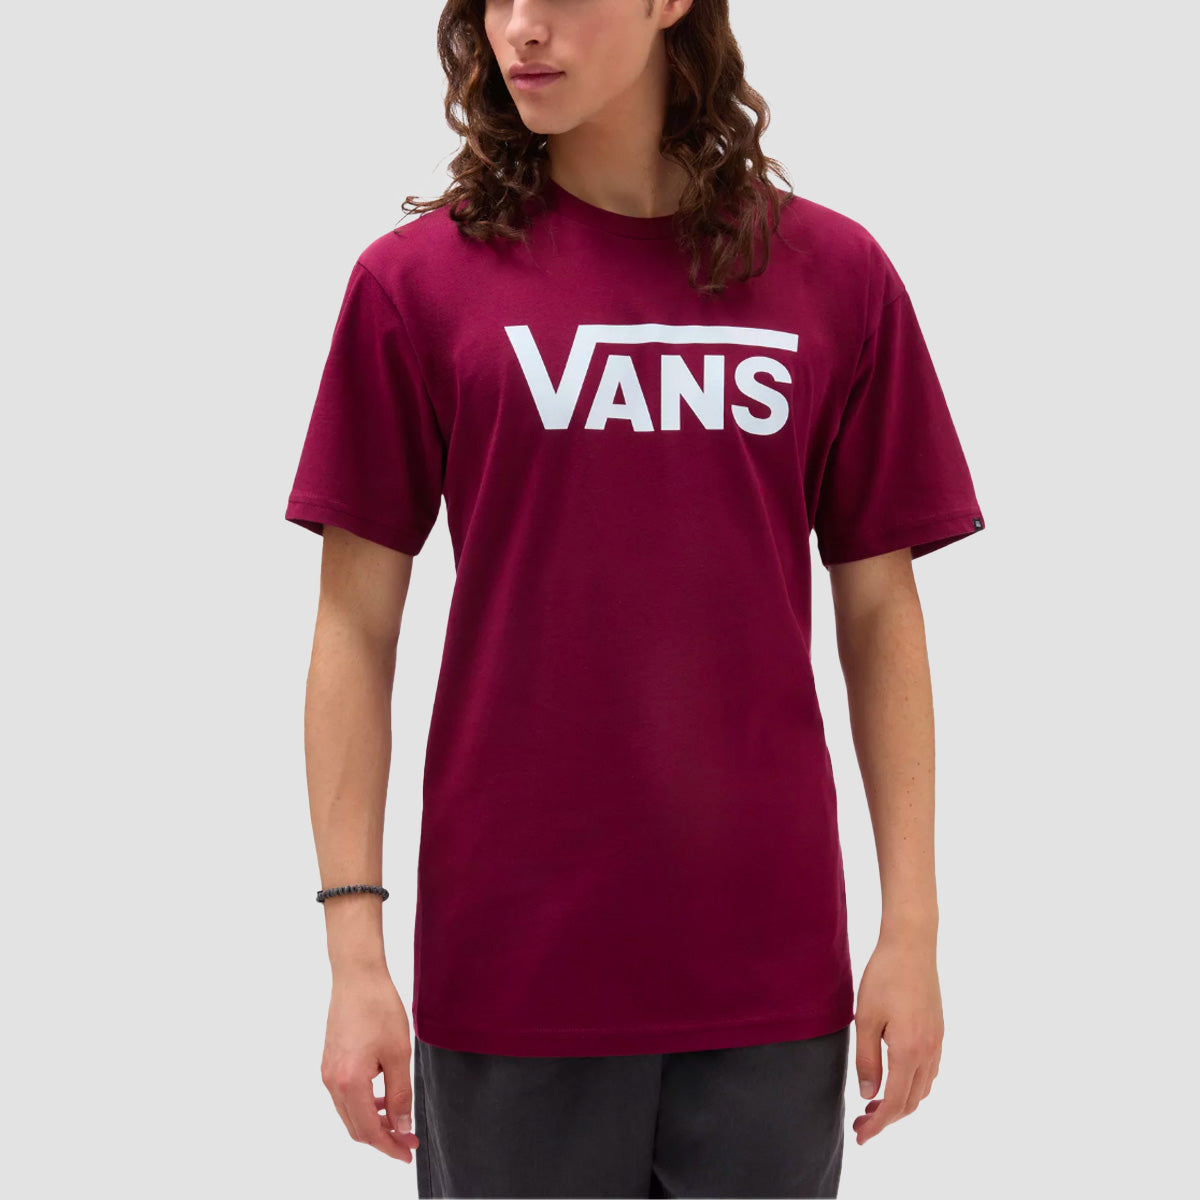 Vans Classic T-Shirt Burgundy/White